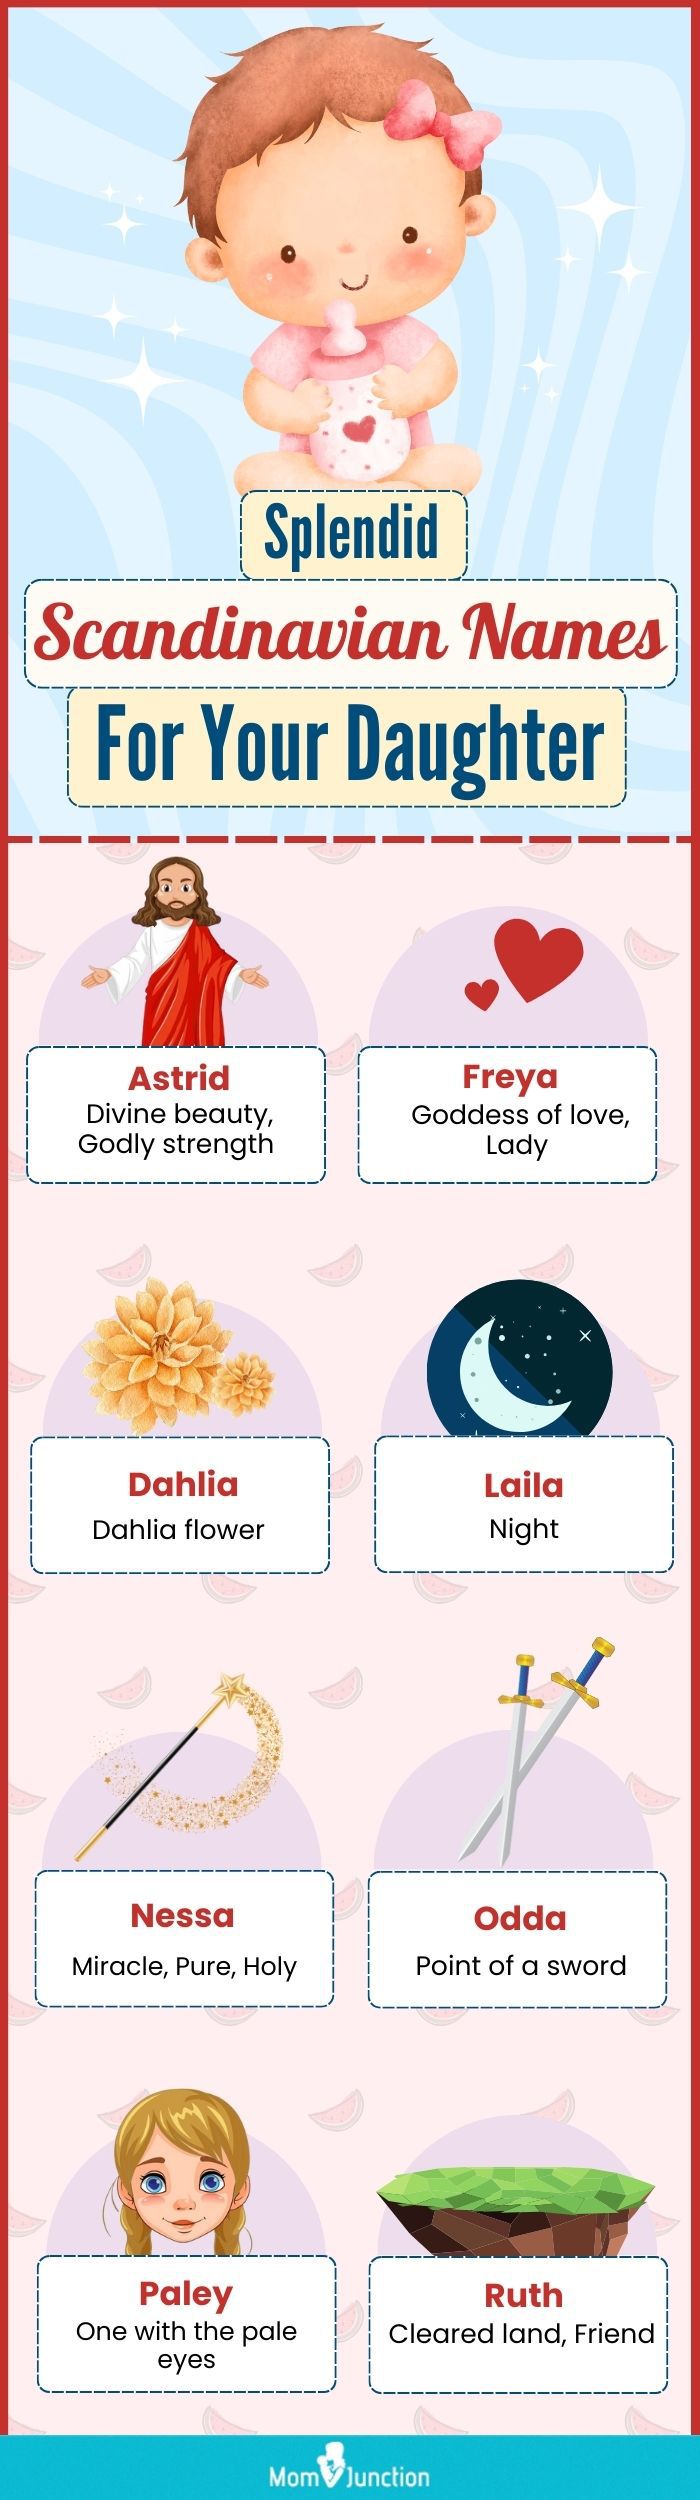 splendid scandinavian names for your daughter (infographic)